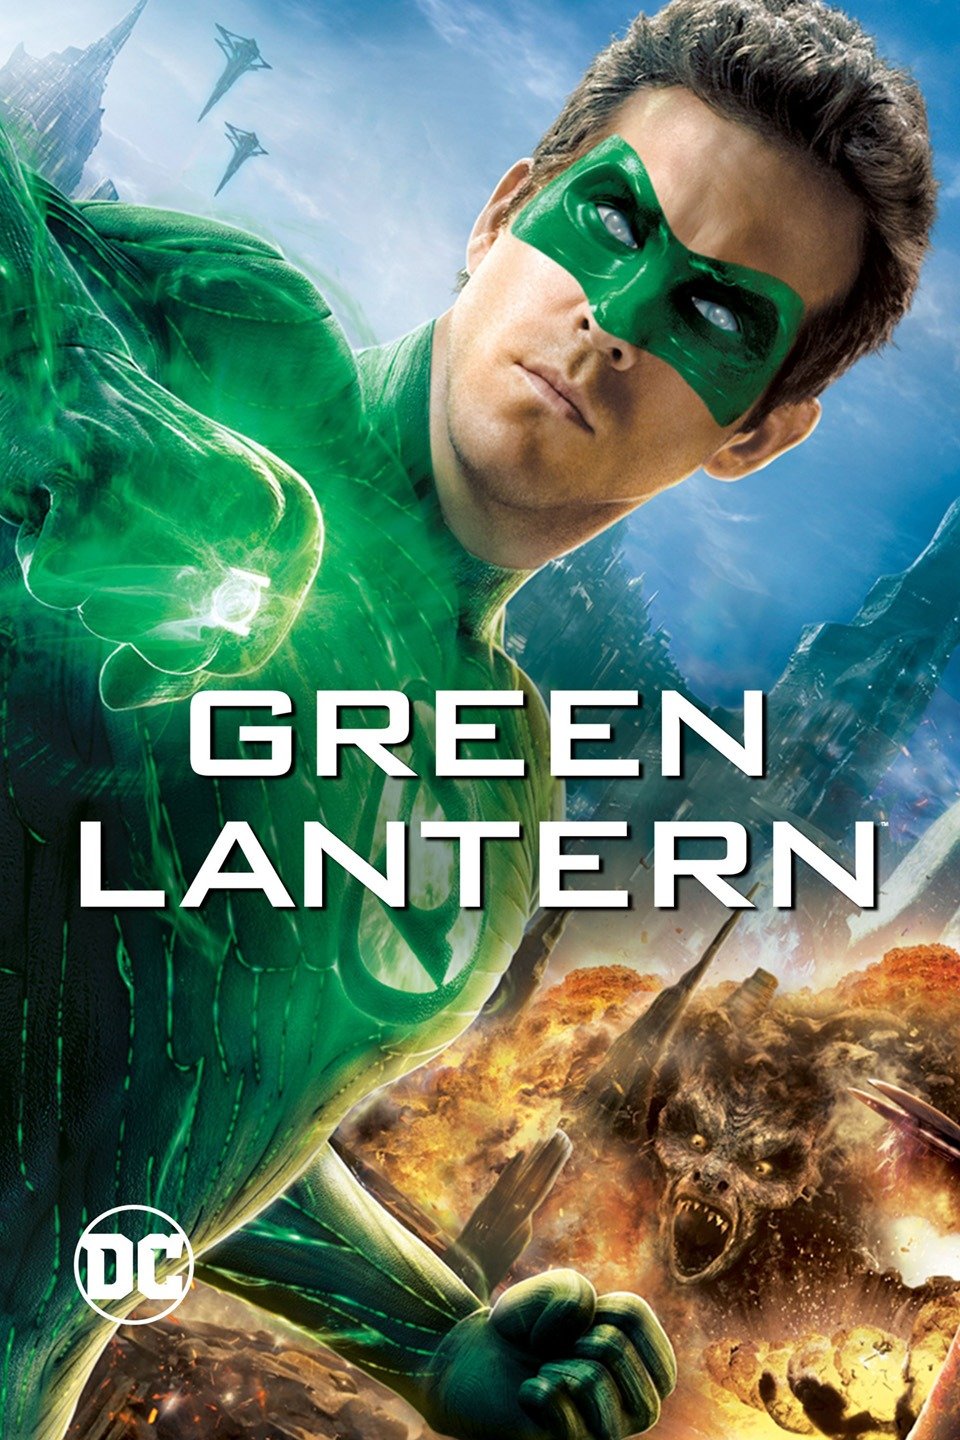 [MINI-HD] Green Lantern (2011) กรีน แลนเทิร์น [720p] [พากย์ไทย 5.1 + เสียงอังกฤษ 5.1] [Blu-ray.AC-3.x264] [บรรยายไทย + อังกฤษ] [เสียงไทย + ซับไทย] [Modified] [ONE2UP]